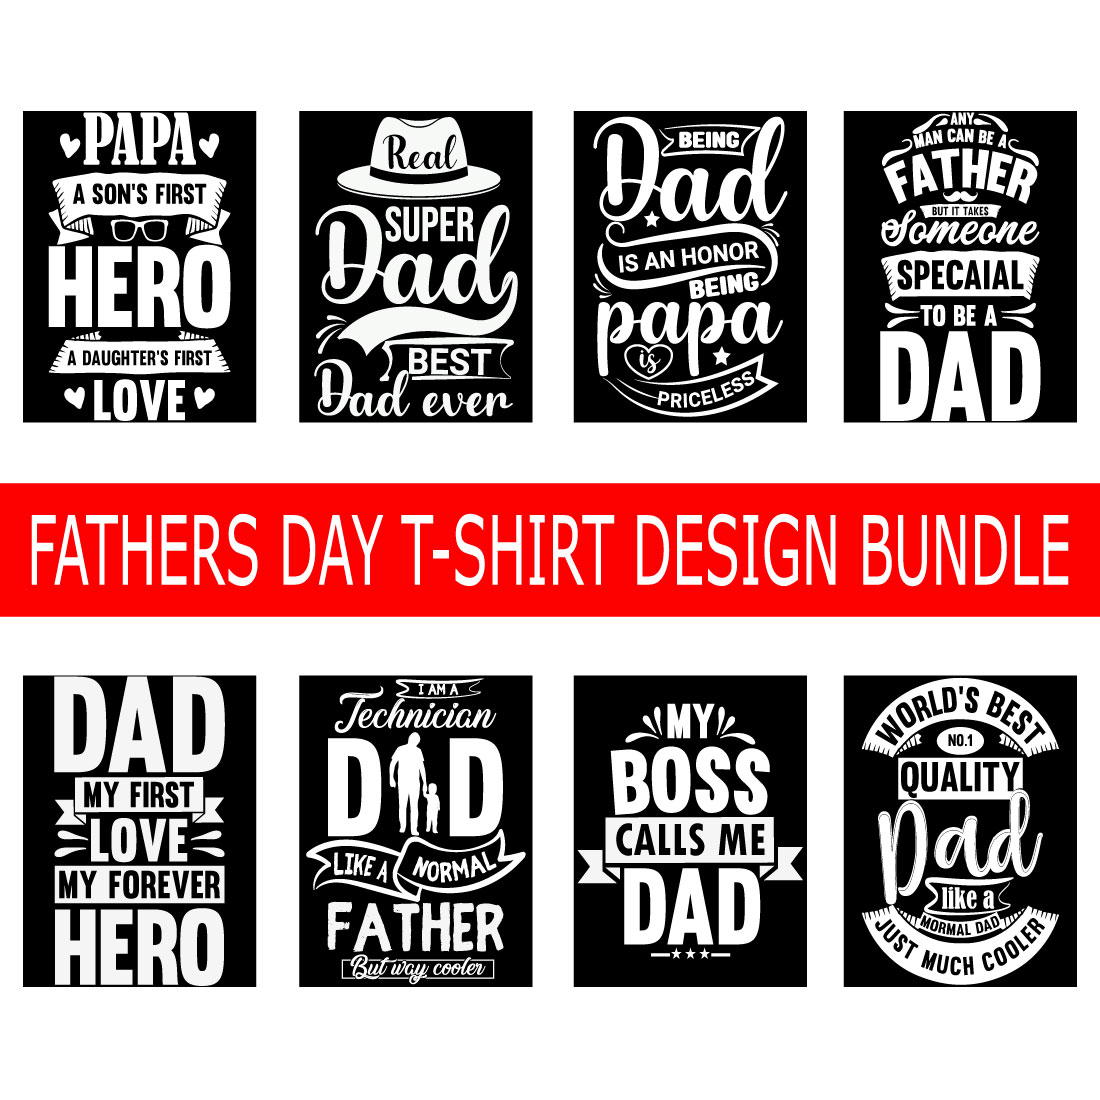 Papa typography t-shirt design bundle preview image.